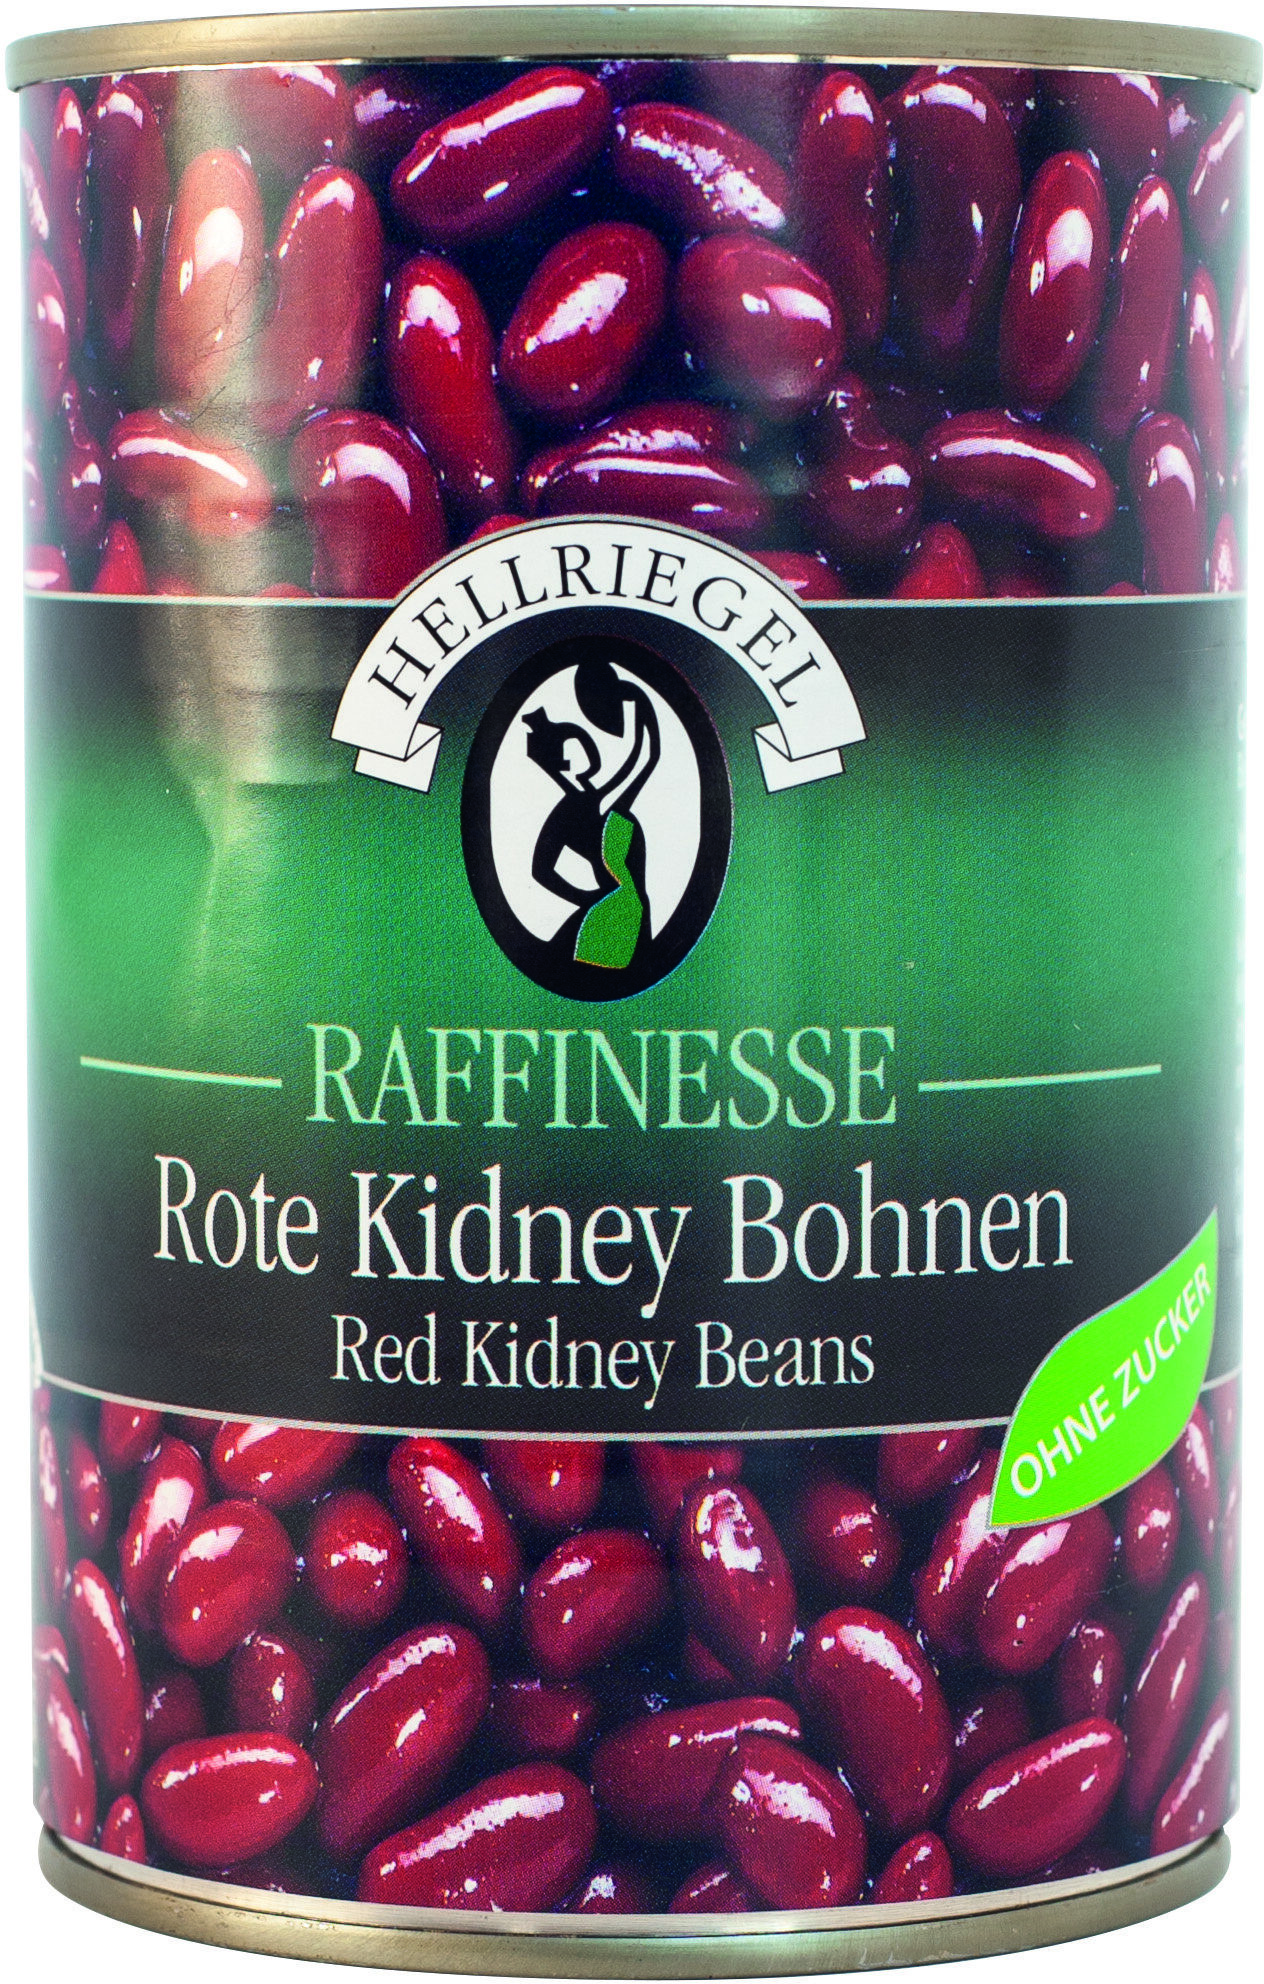 Hellriegel Raffinesse Kidney-Bohnen rot - Product - de